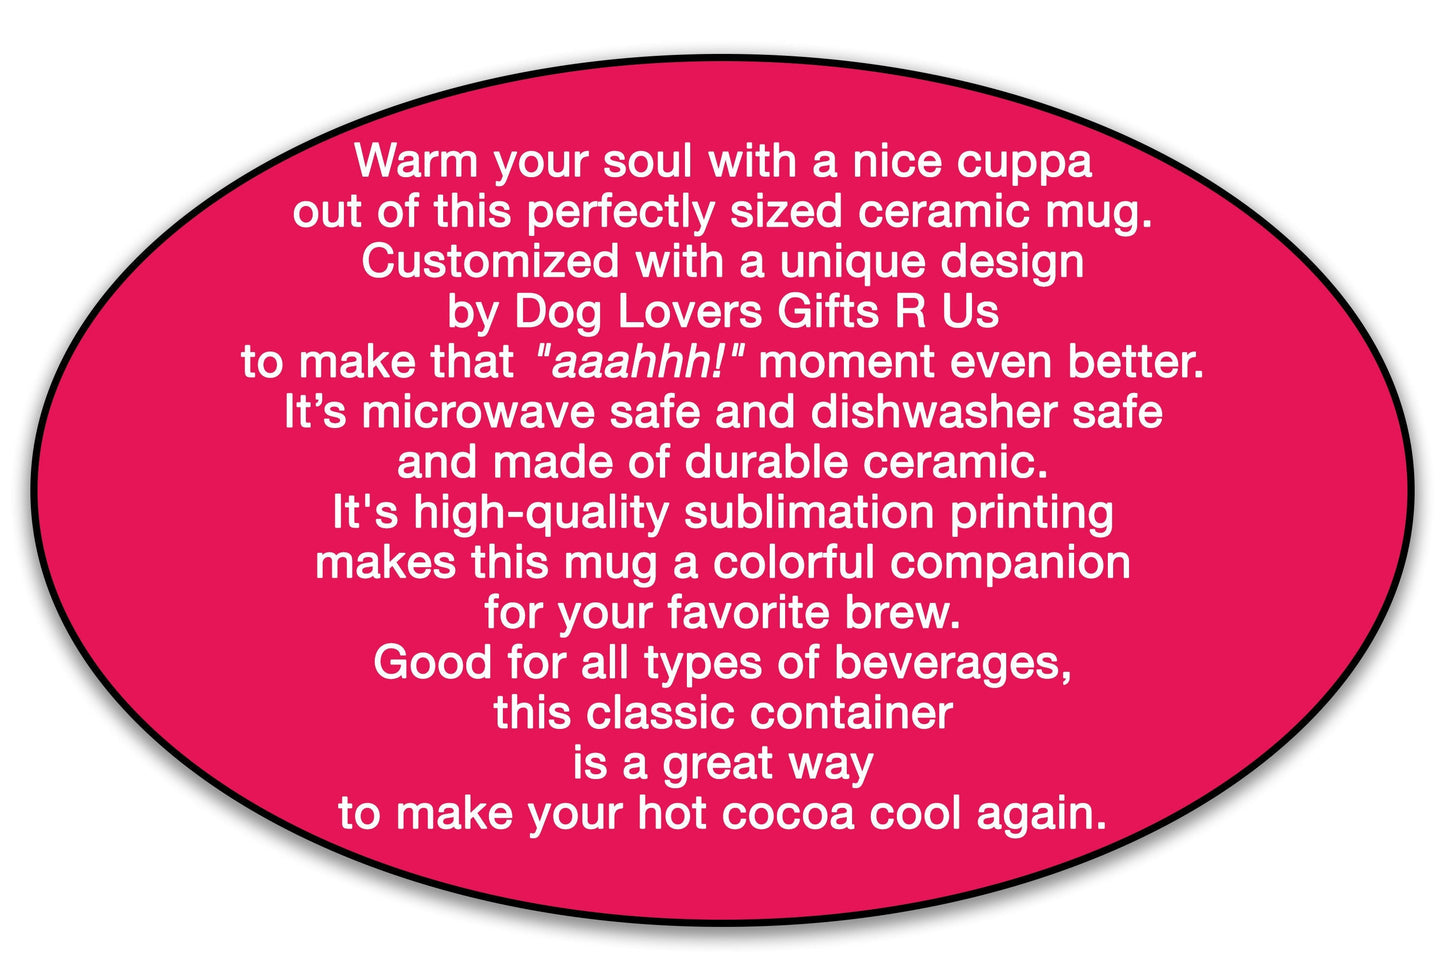 Personalized Dachshund Dog Mug, Dog Mom Coffee Mug, Dog Lover Mug, Pet Mug, Doxie Mom Gift, Dog Coffee Cup, Weiner Dog Gifts, Custom Dog Mug